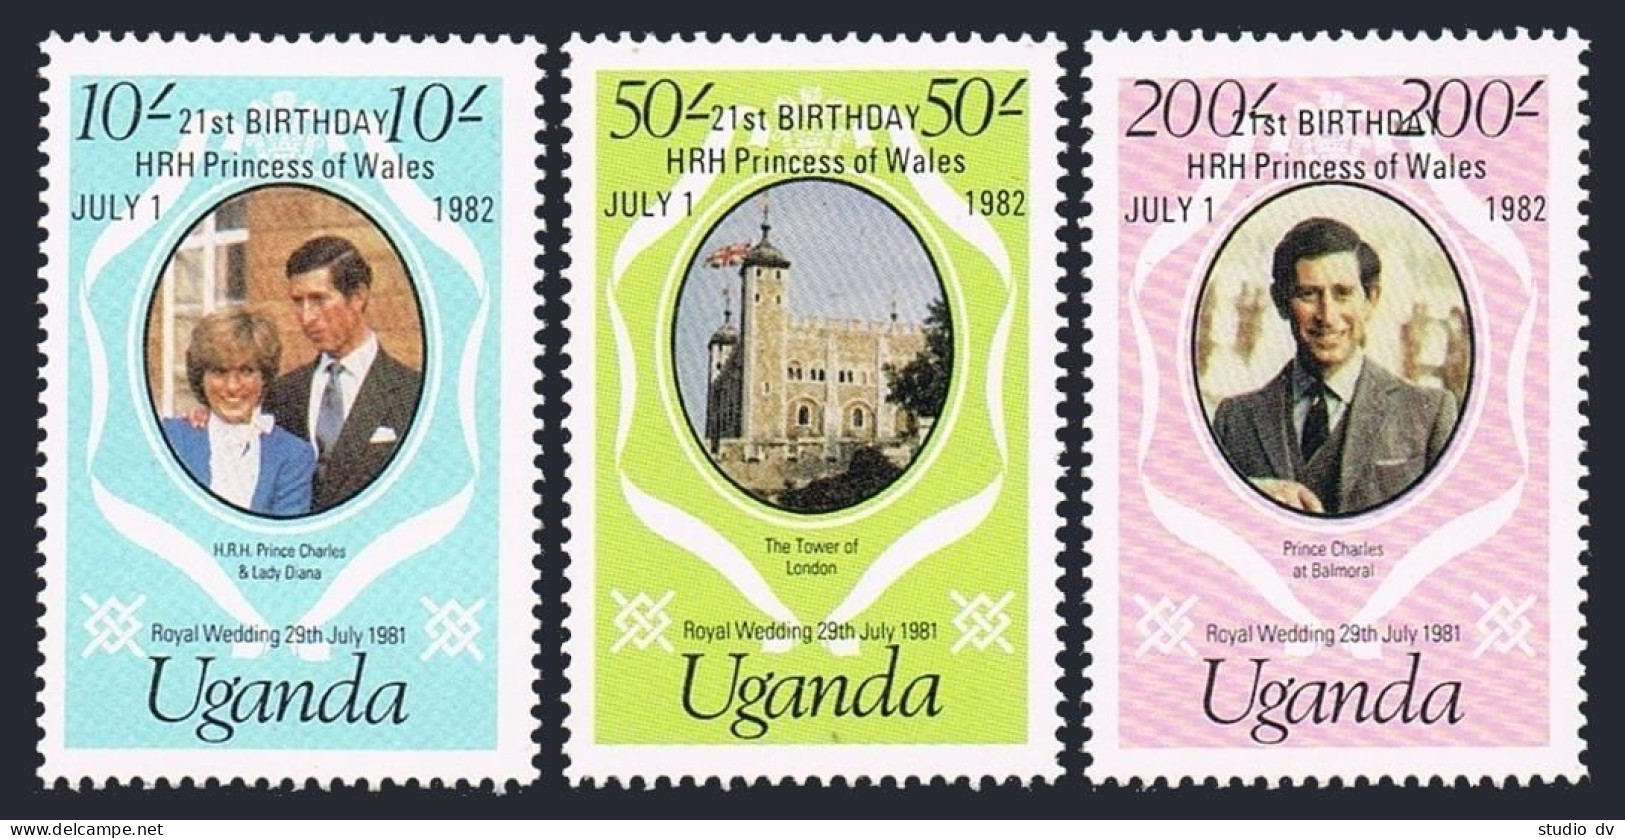 Uganda 342-344,MNH.Michel 329-331. Diana-21,1982.Prince Charles,Lady Diana. - Ouganda (1962-...)